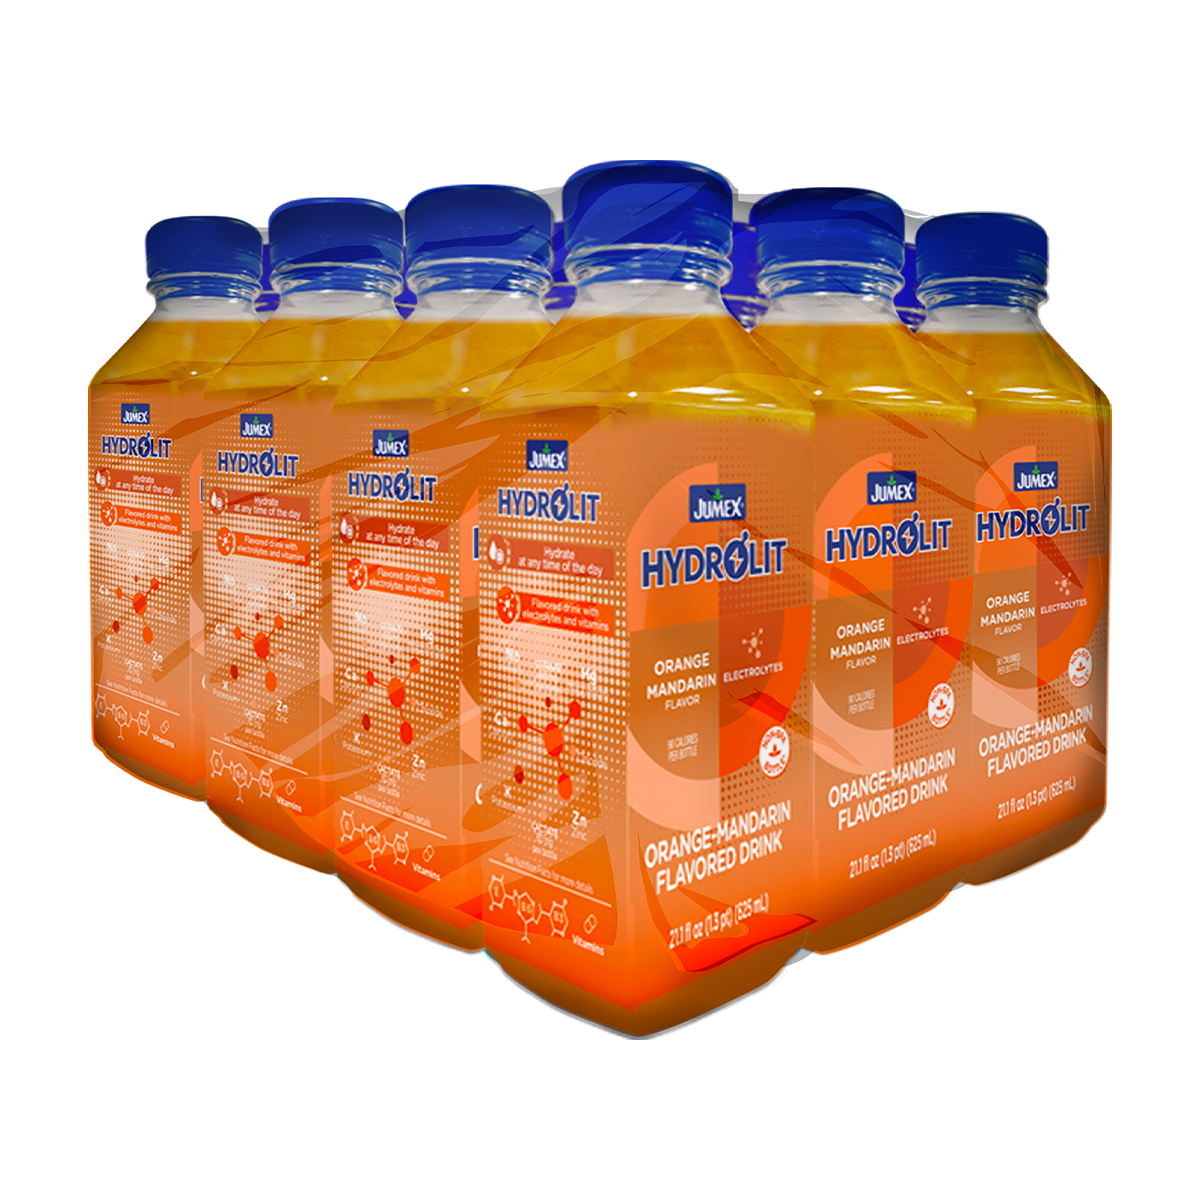 Orange-Mandarin Flavored Electrolyte Drink 12 pack